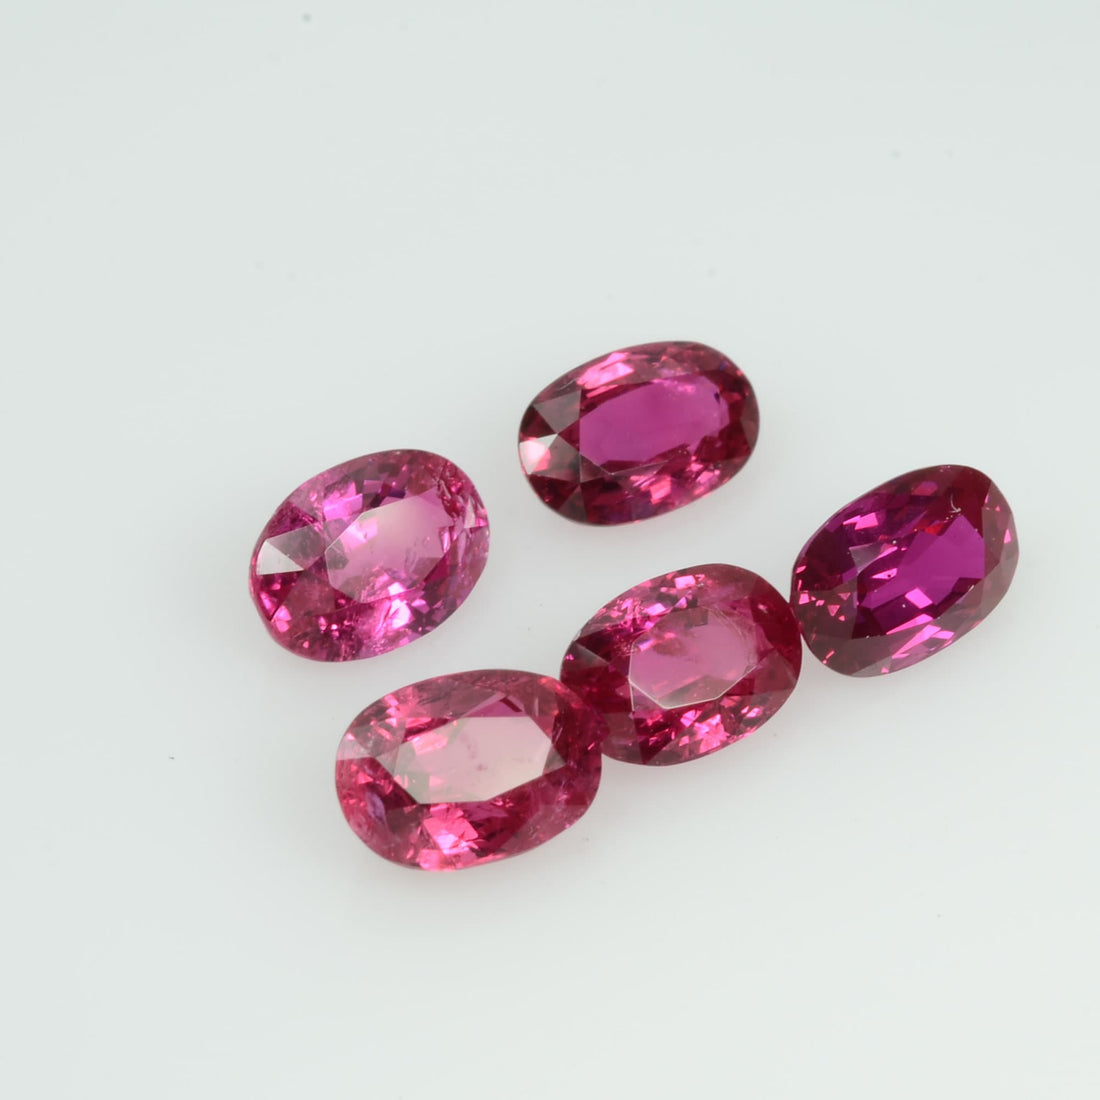 6x4 mm Natural Burma Ruby Loose Gemstone Oval Cut